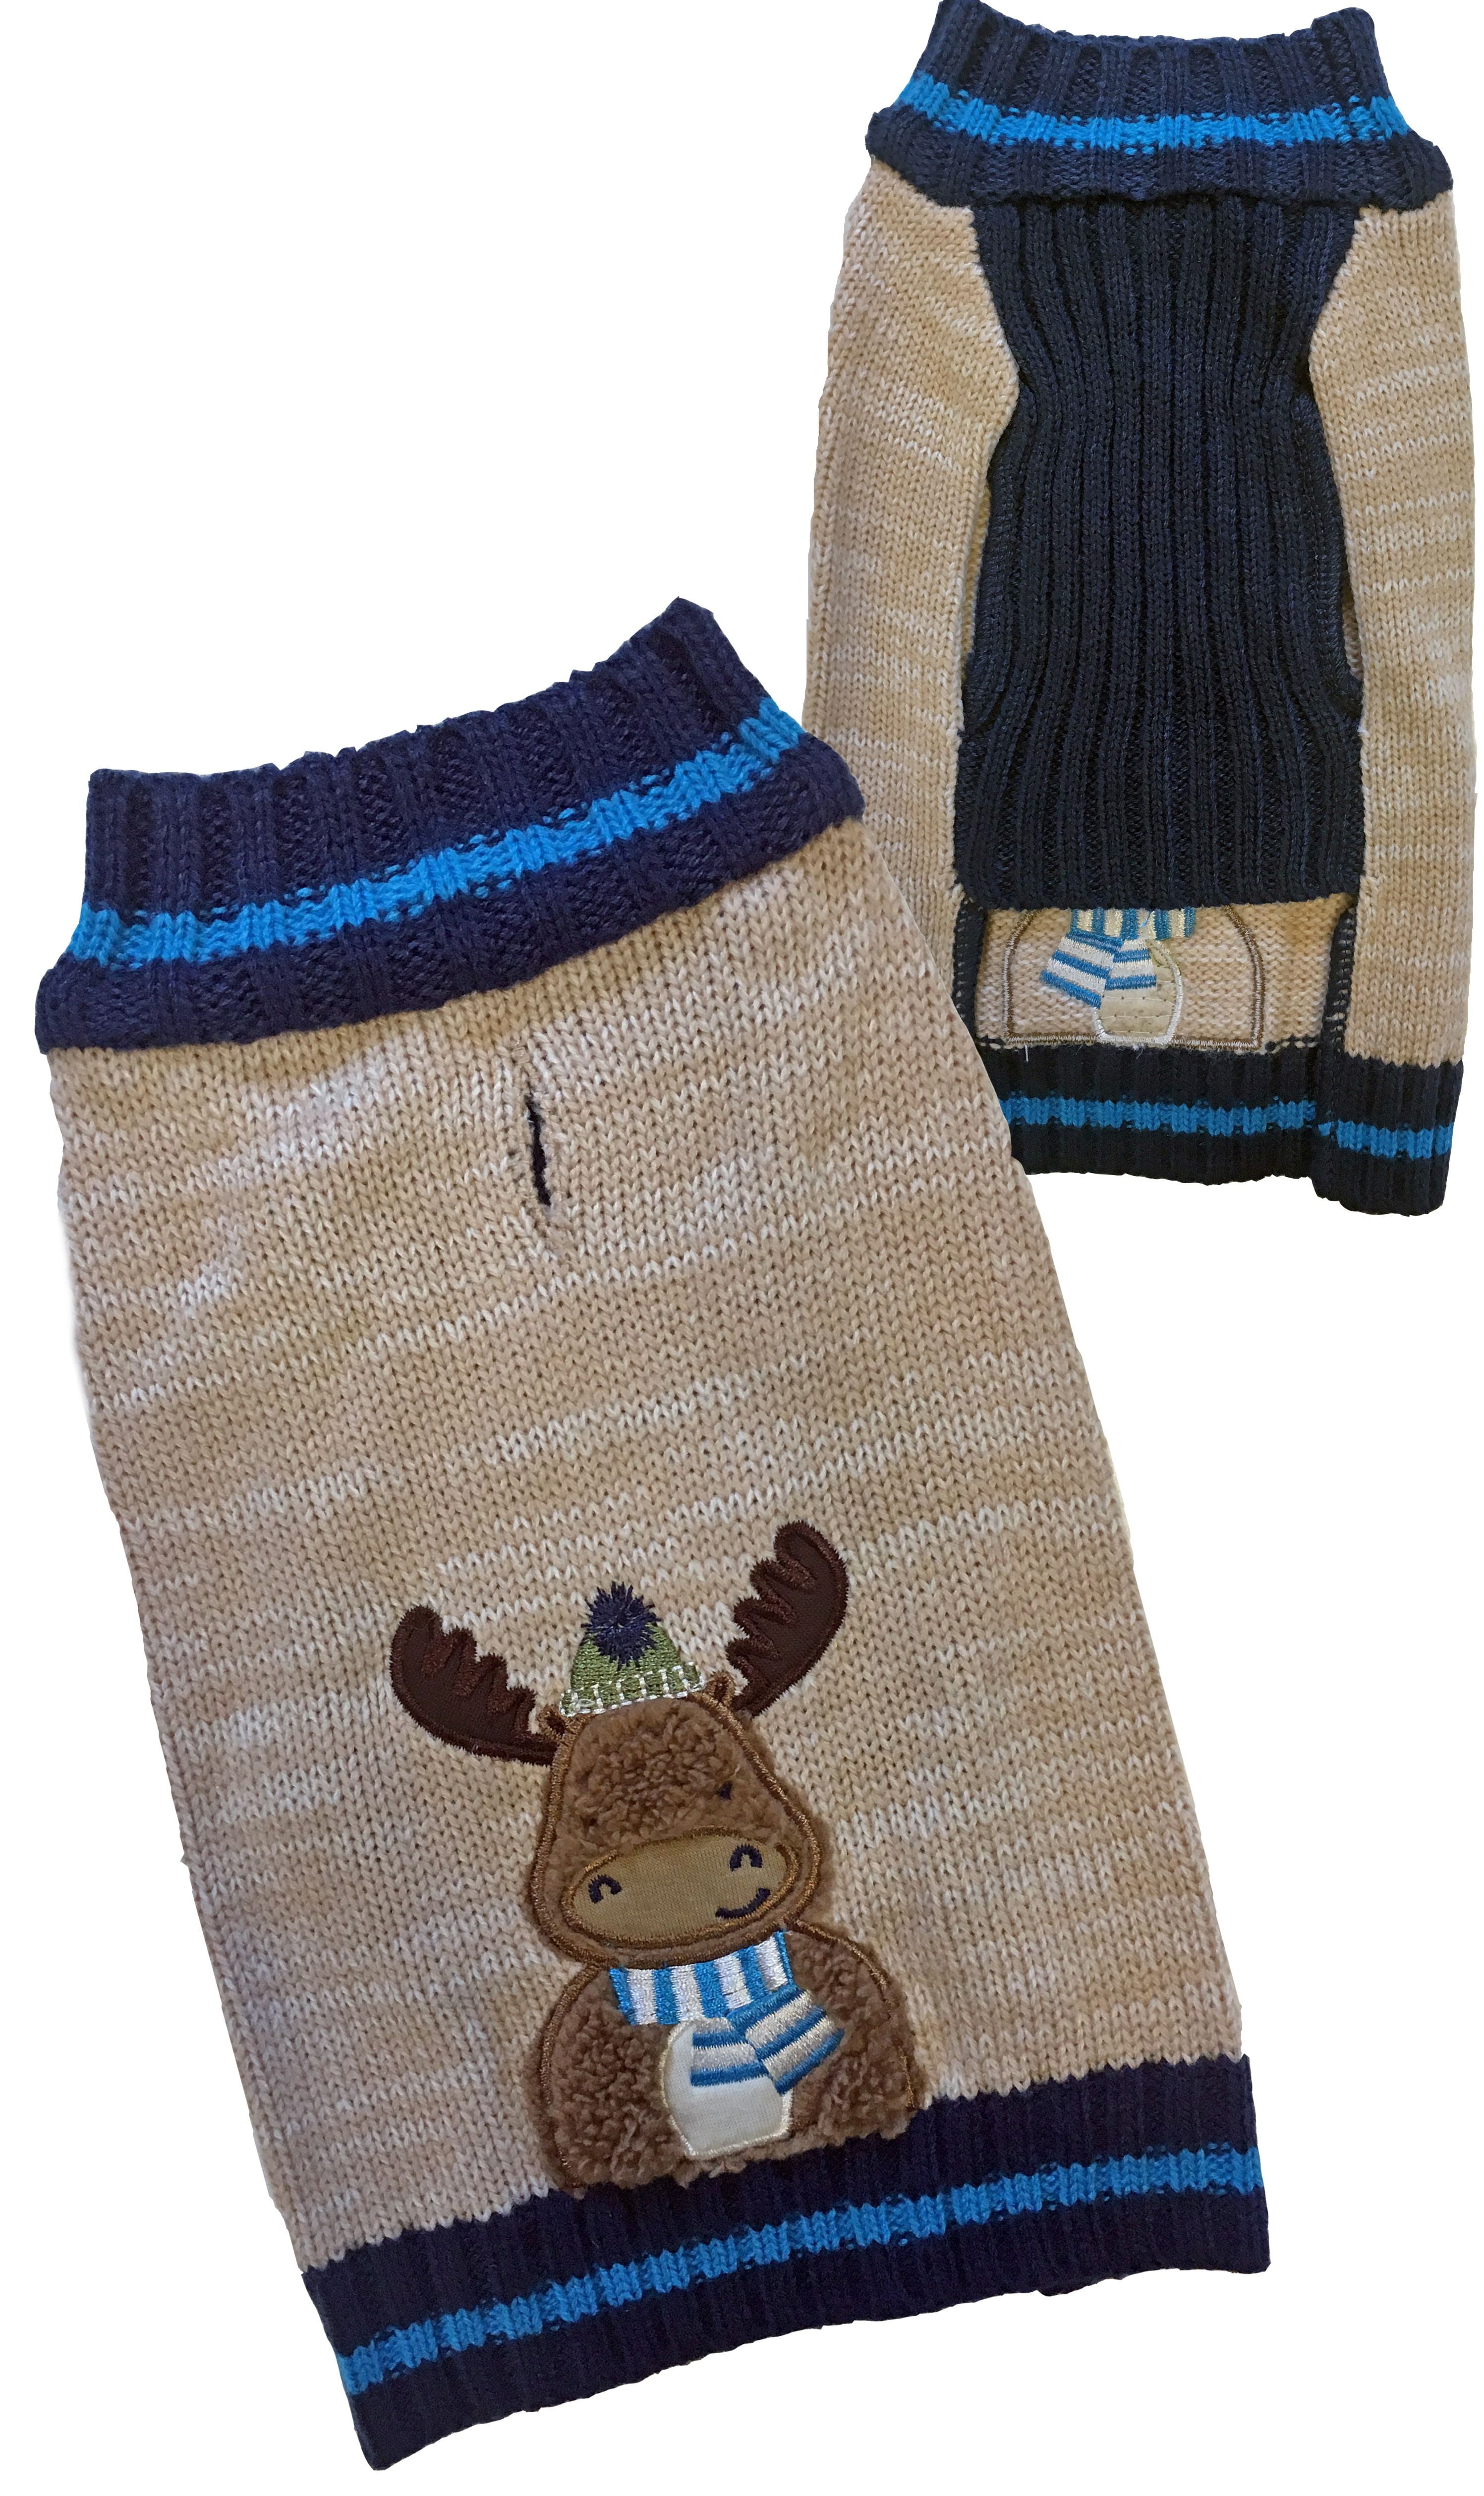 Petrageous Dog Sweater Acadia Moose Turtleneck Winter Christmas XS S M XL 